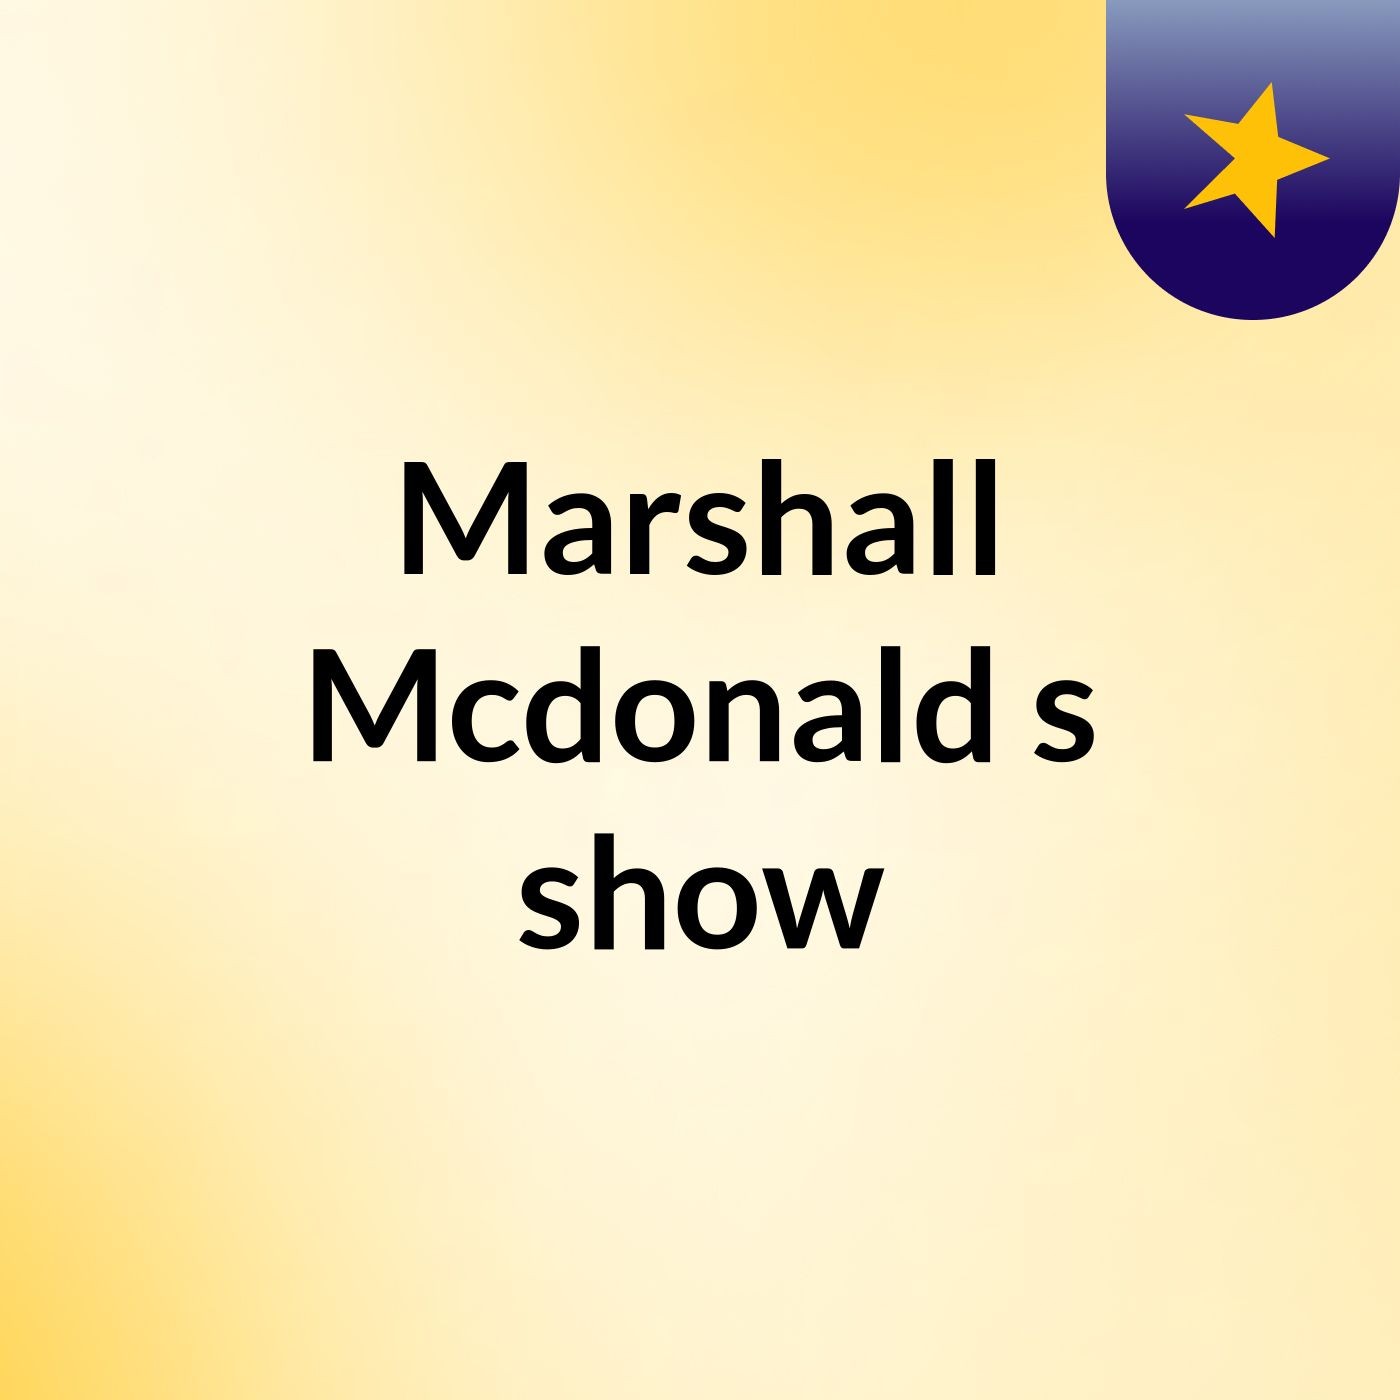 Marshall Mcdonald's show